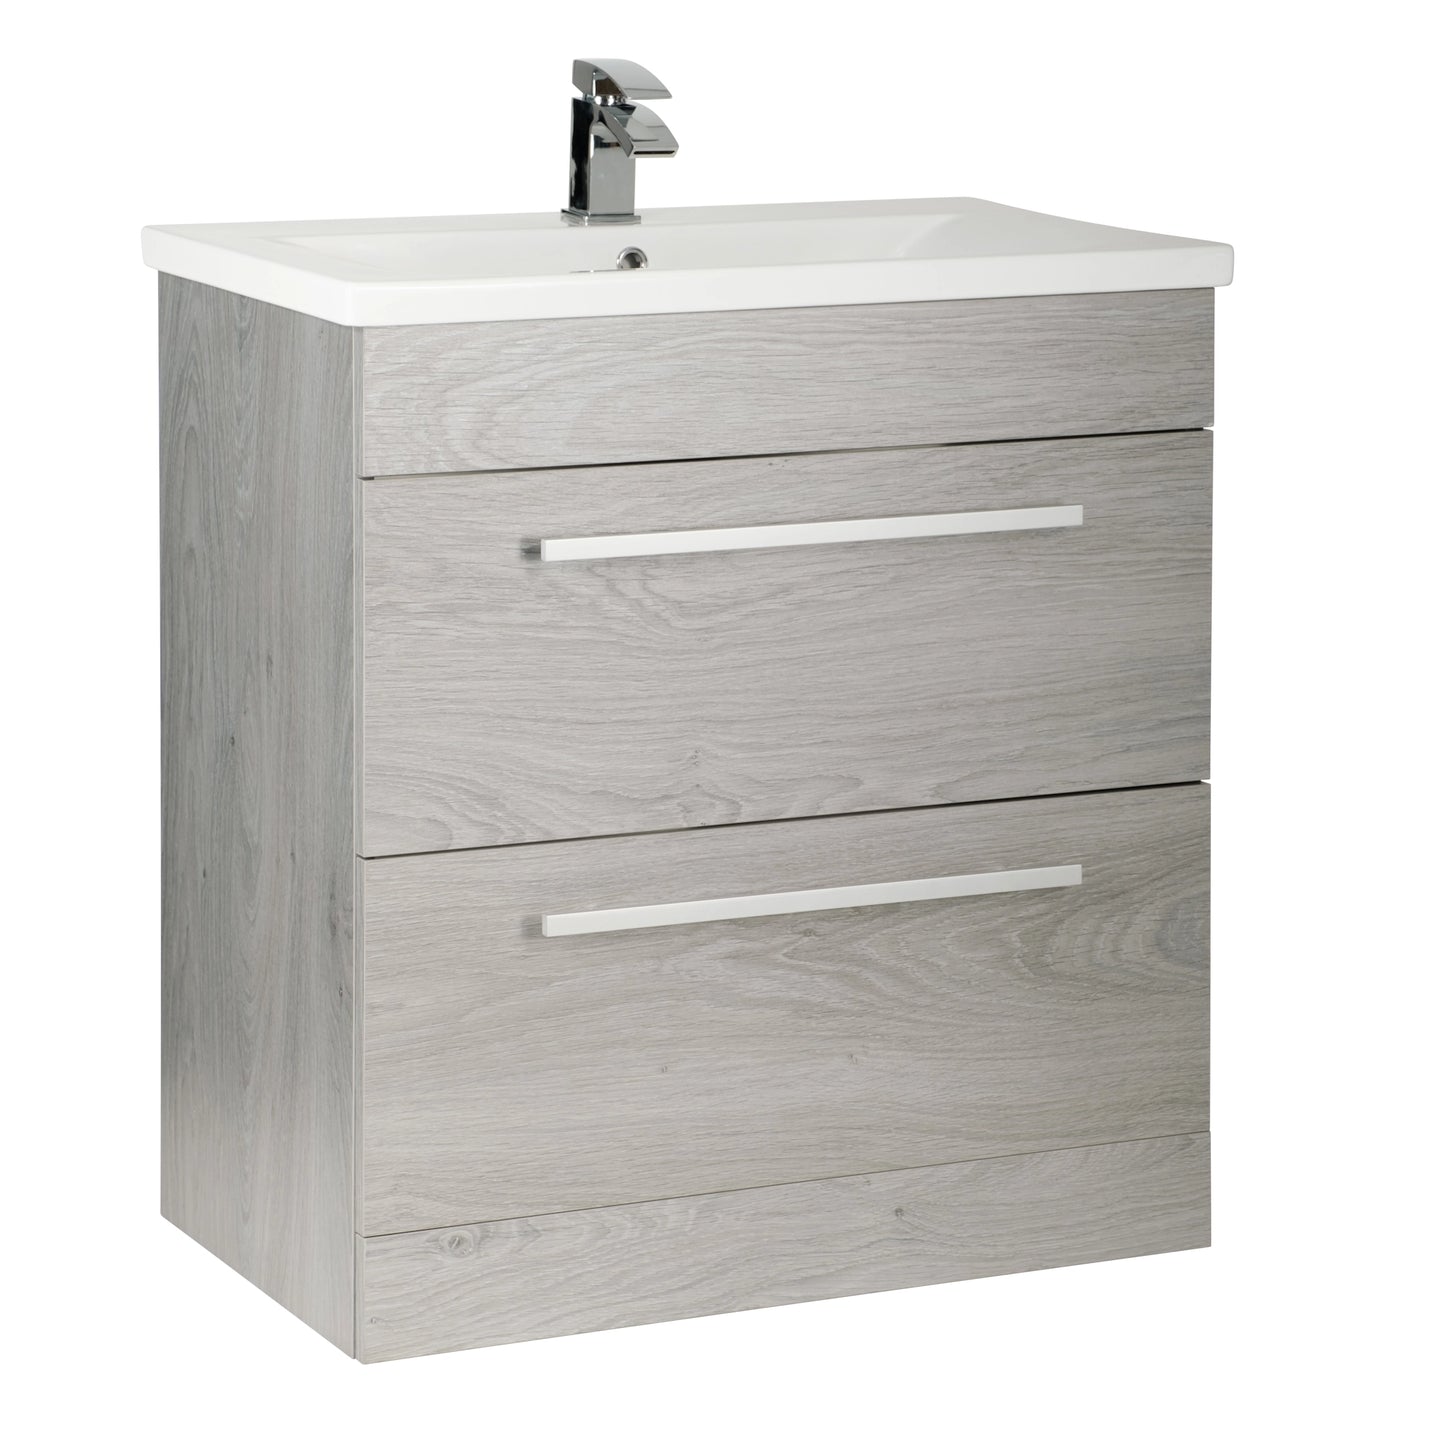 Purity Kartell Floor Standing Two Drawer 800mm Basin Sink Vanity Unit